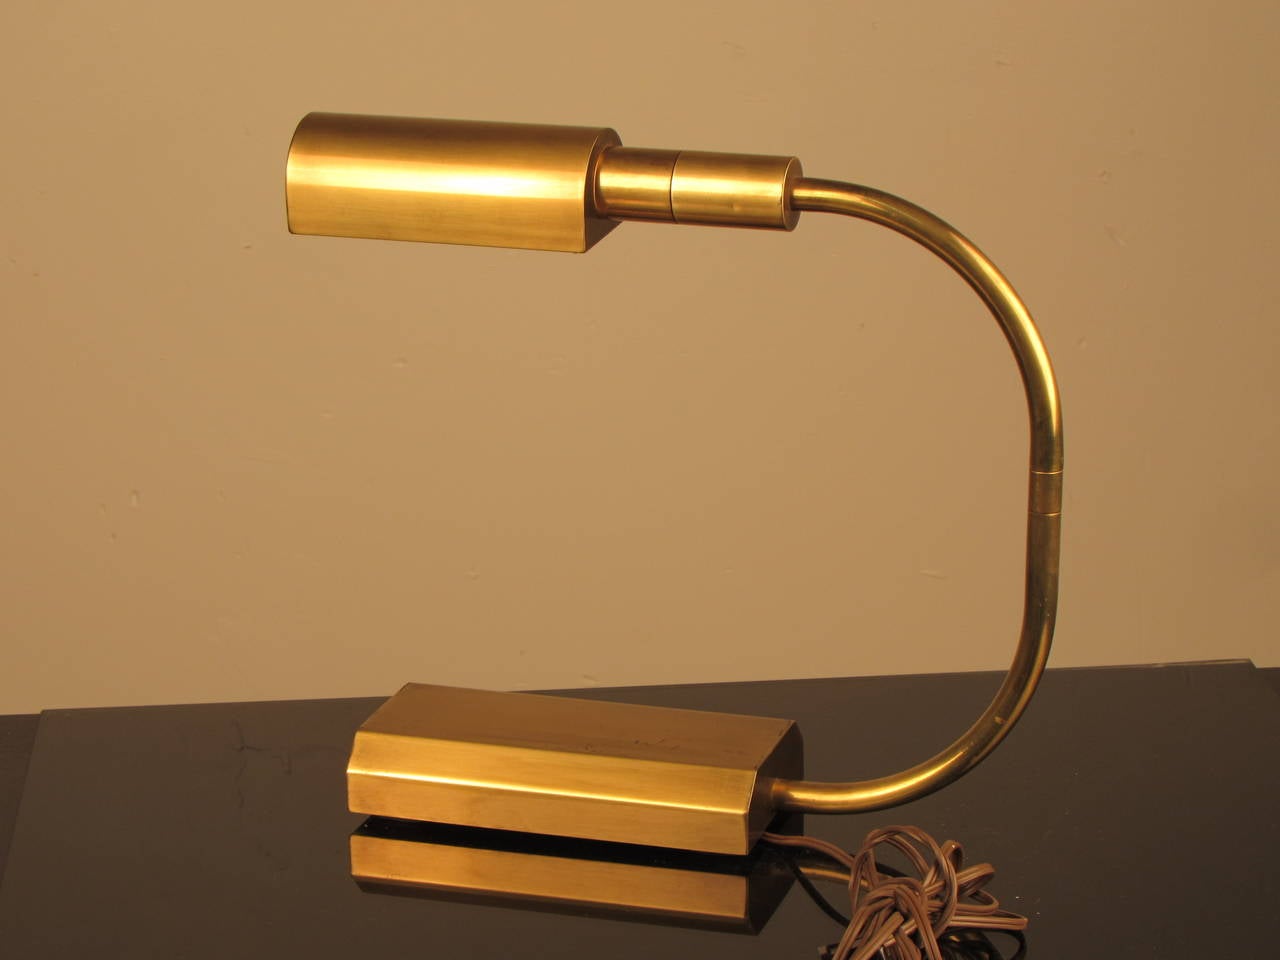 American Sleek Bauhaus Inspired Brass Desk Lamp by Chapman